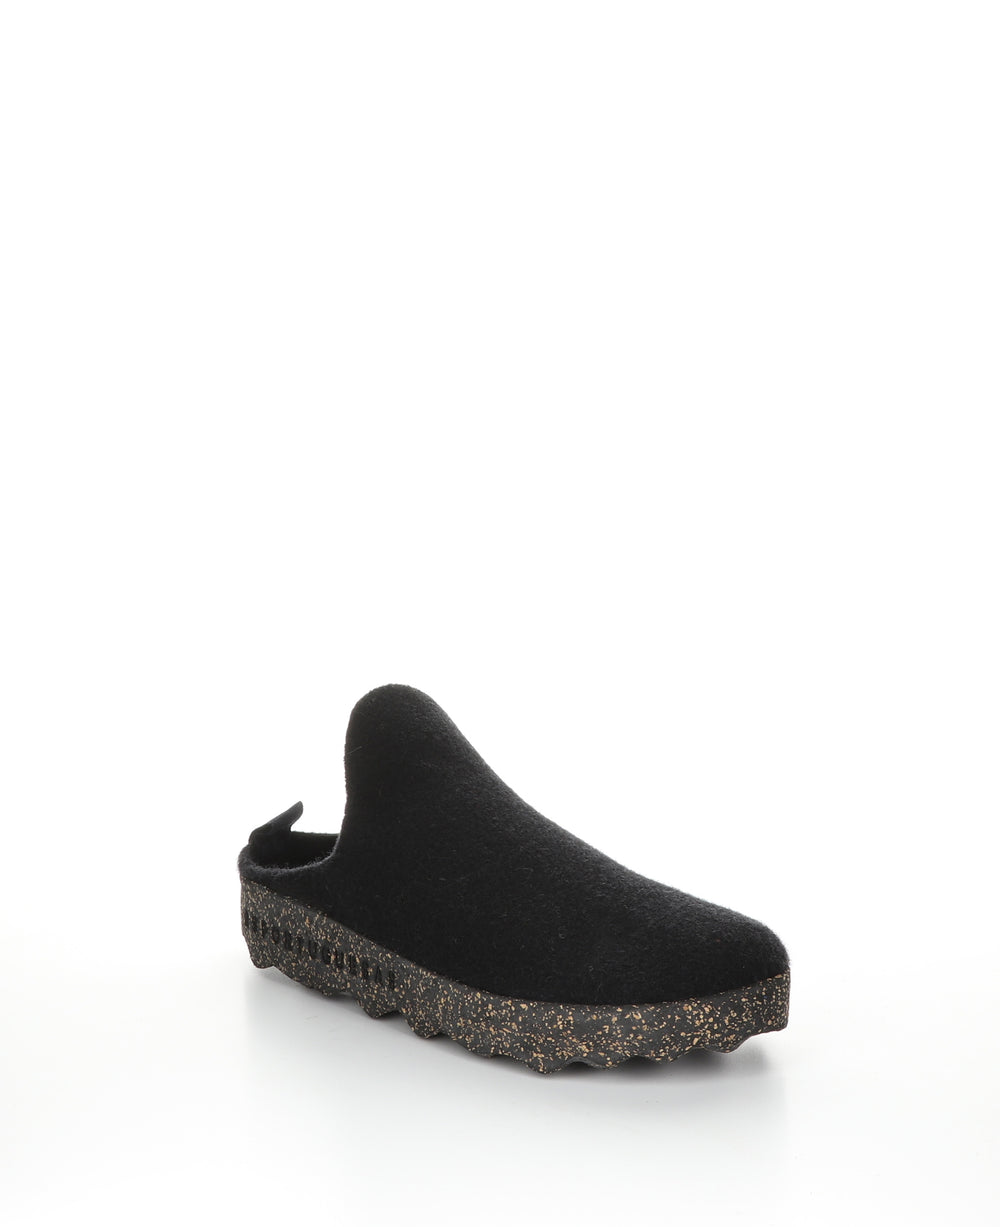 COME023ASP Black Round Toe Shoes